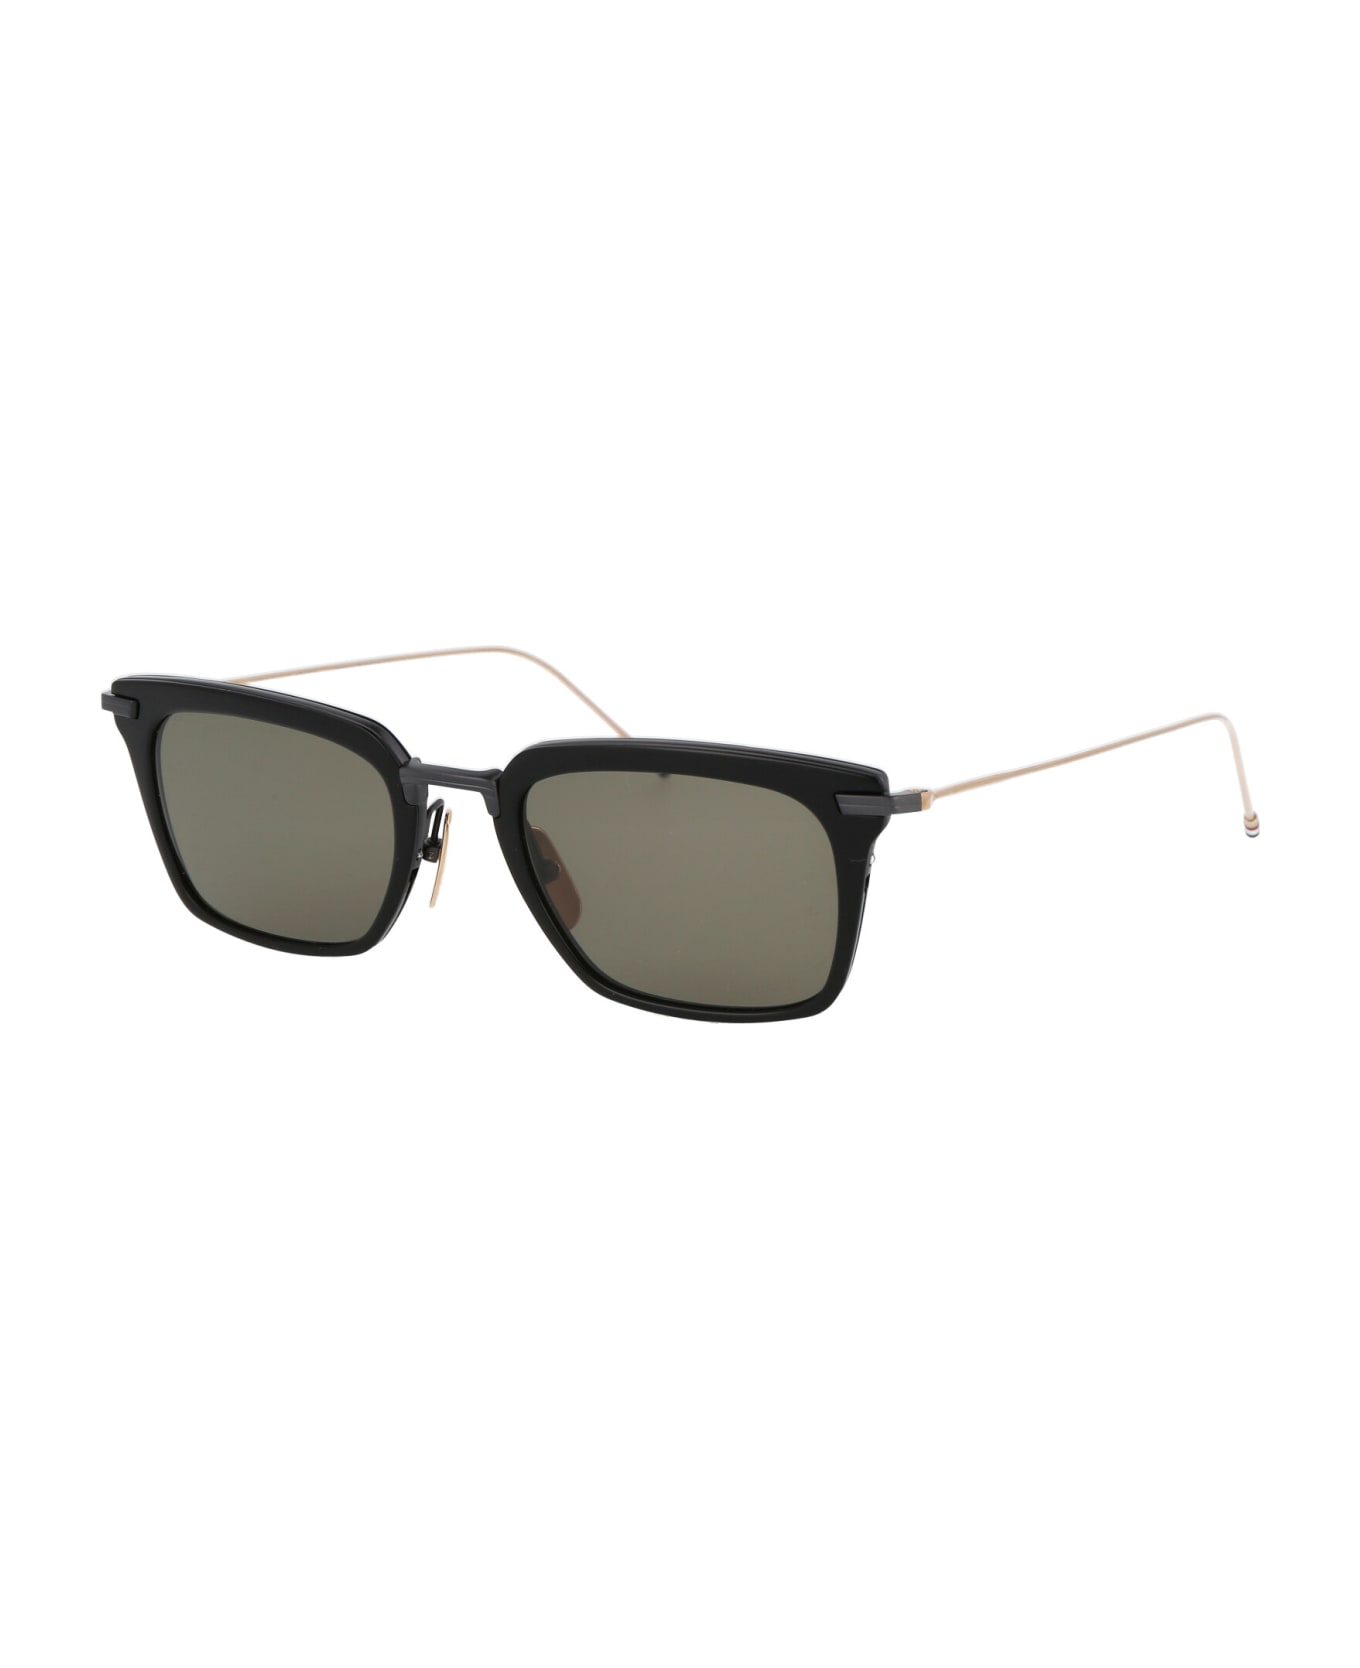 Thom Browne Tb-916 Sunglasses - 01 BLACK - BLACK IRON - WHITE GOLD TEMPLES W/ G-15 サングラス